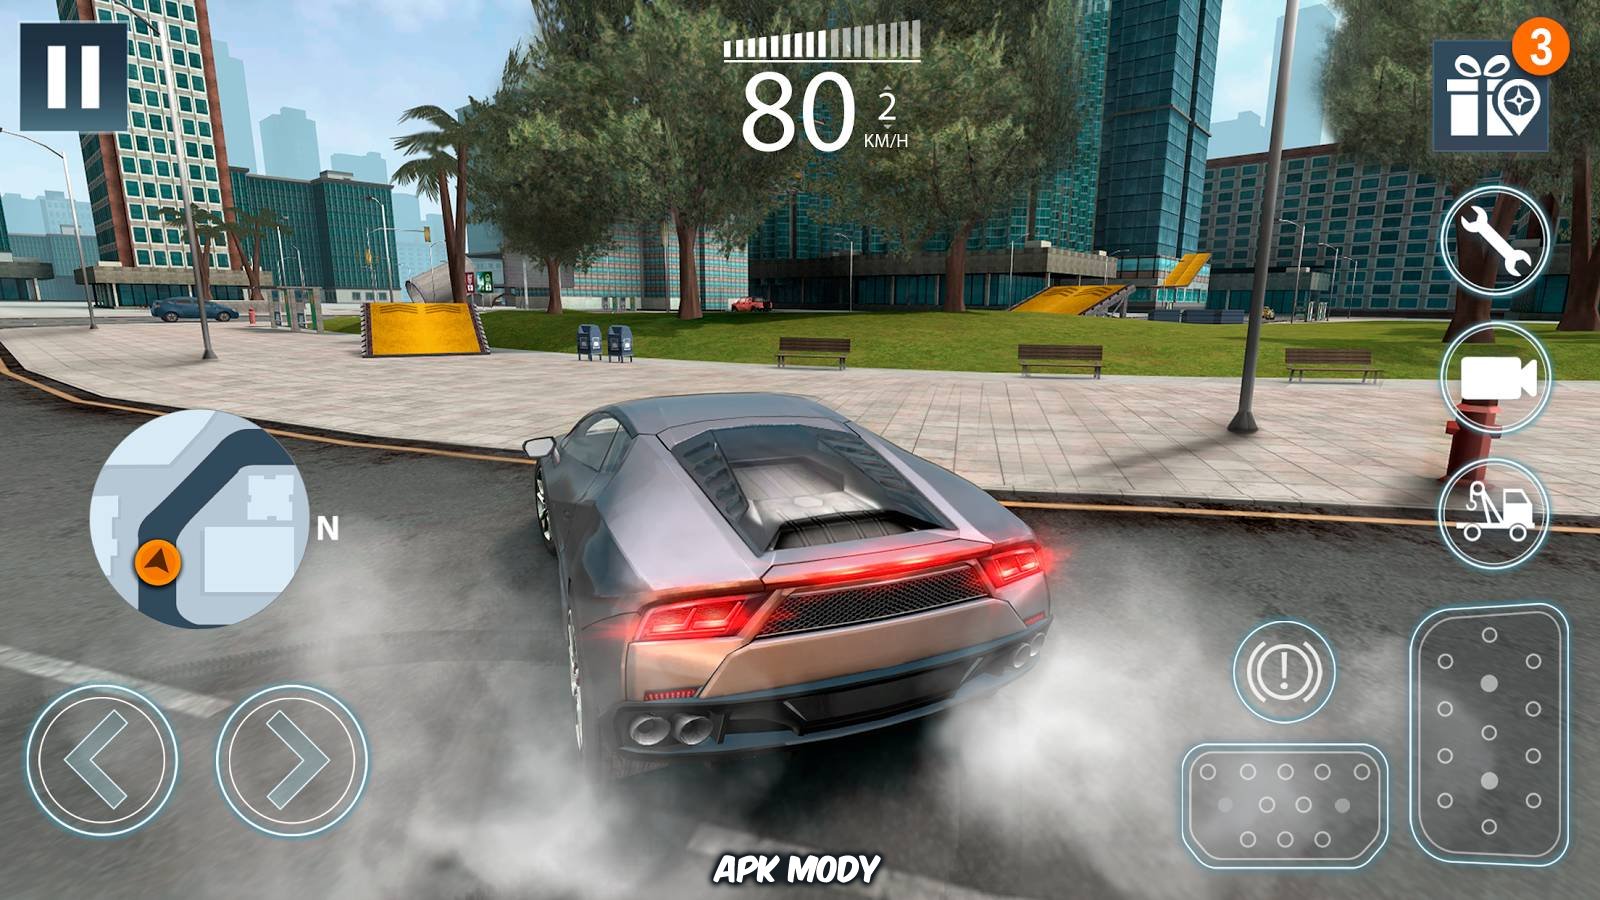 Extreme car driving simulator game download